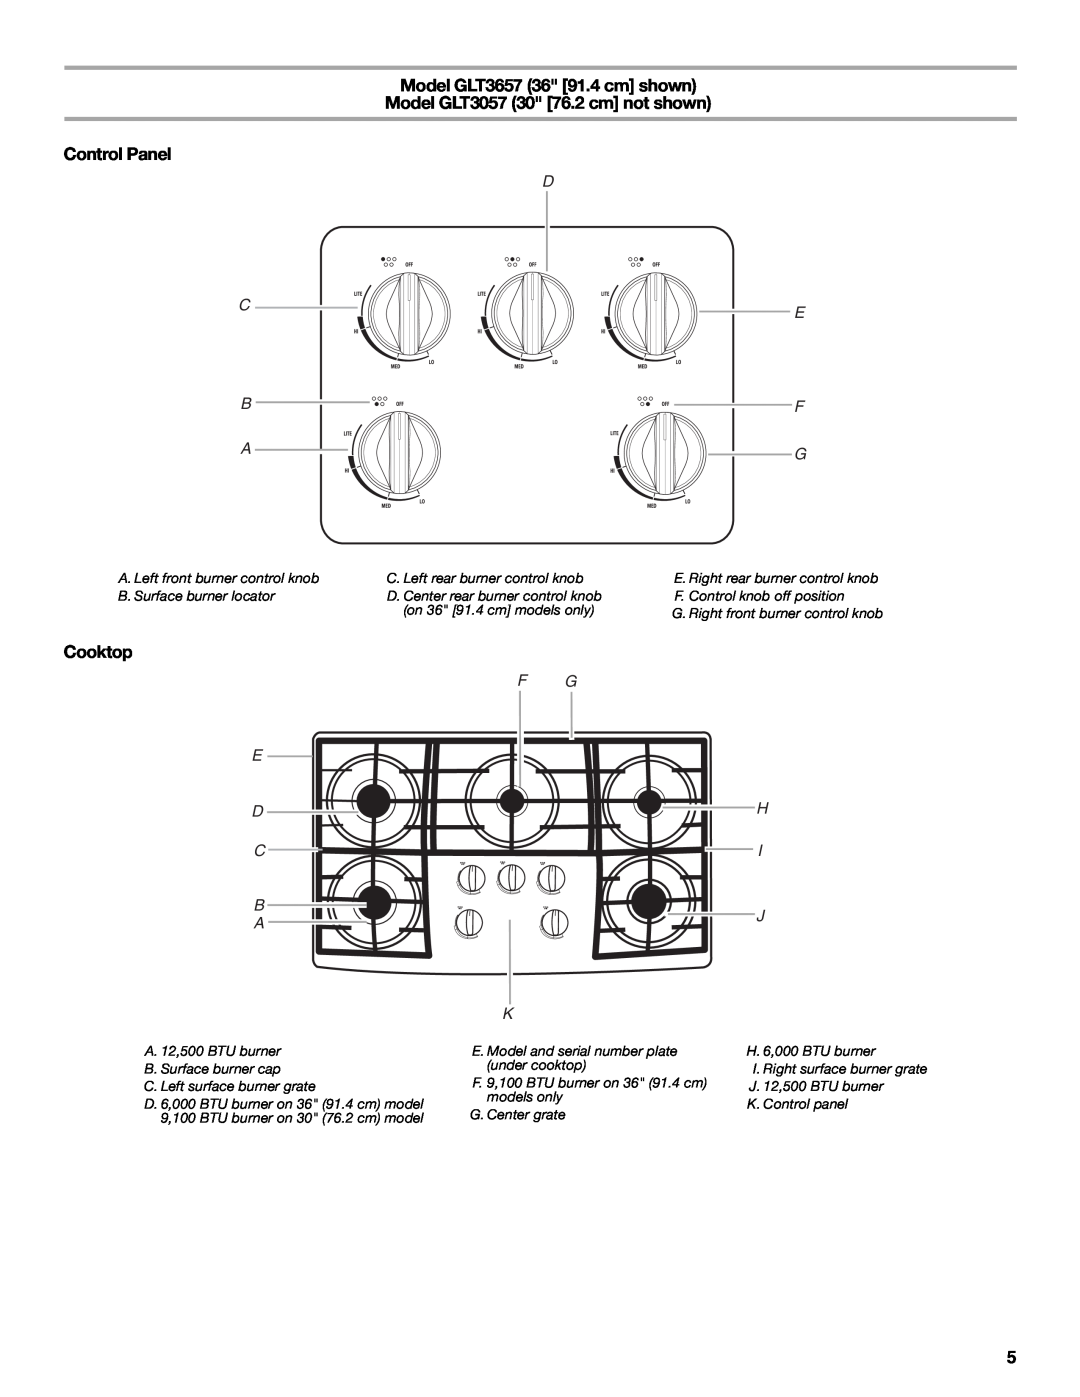 Whirlpool GLT3057 manual Control Panel, Cooktop, D E F G, E D C B A, F G K, H I J, A. Left front burner control knob 